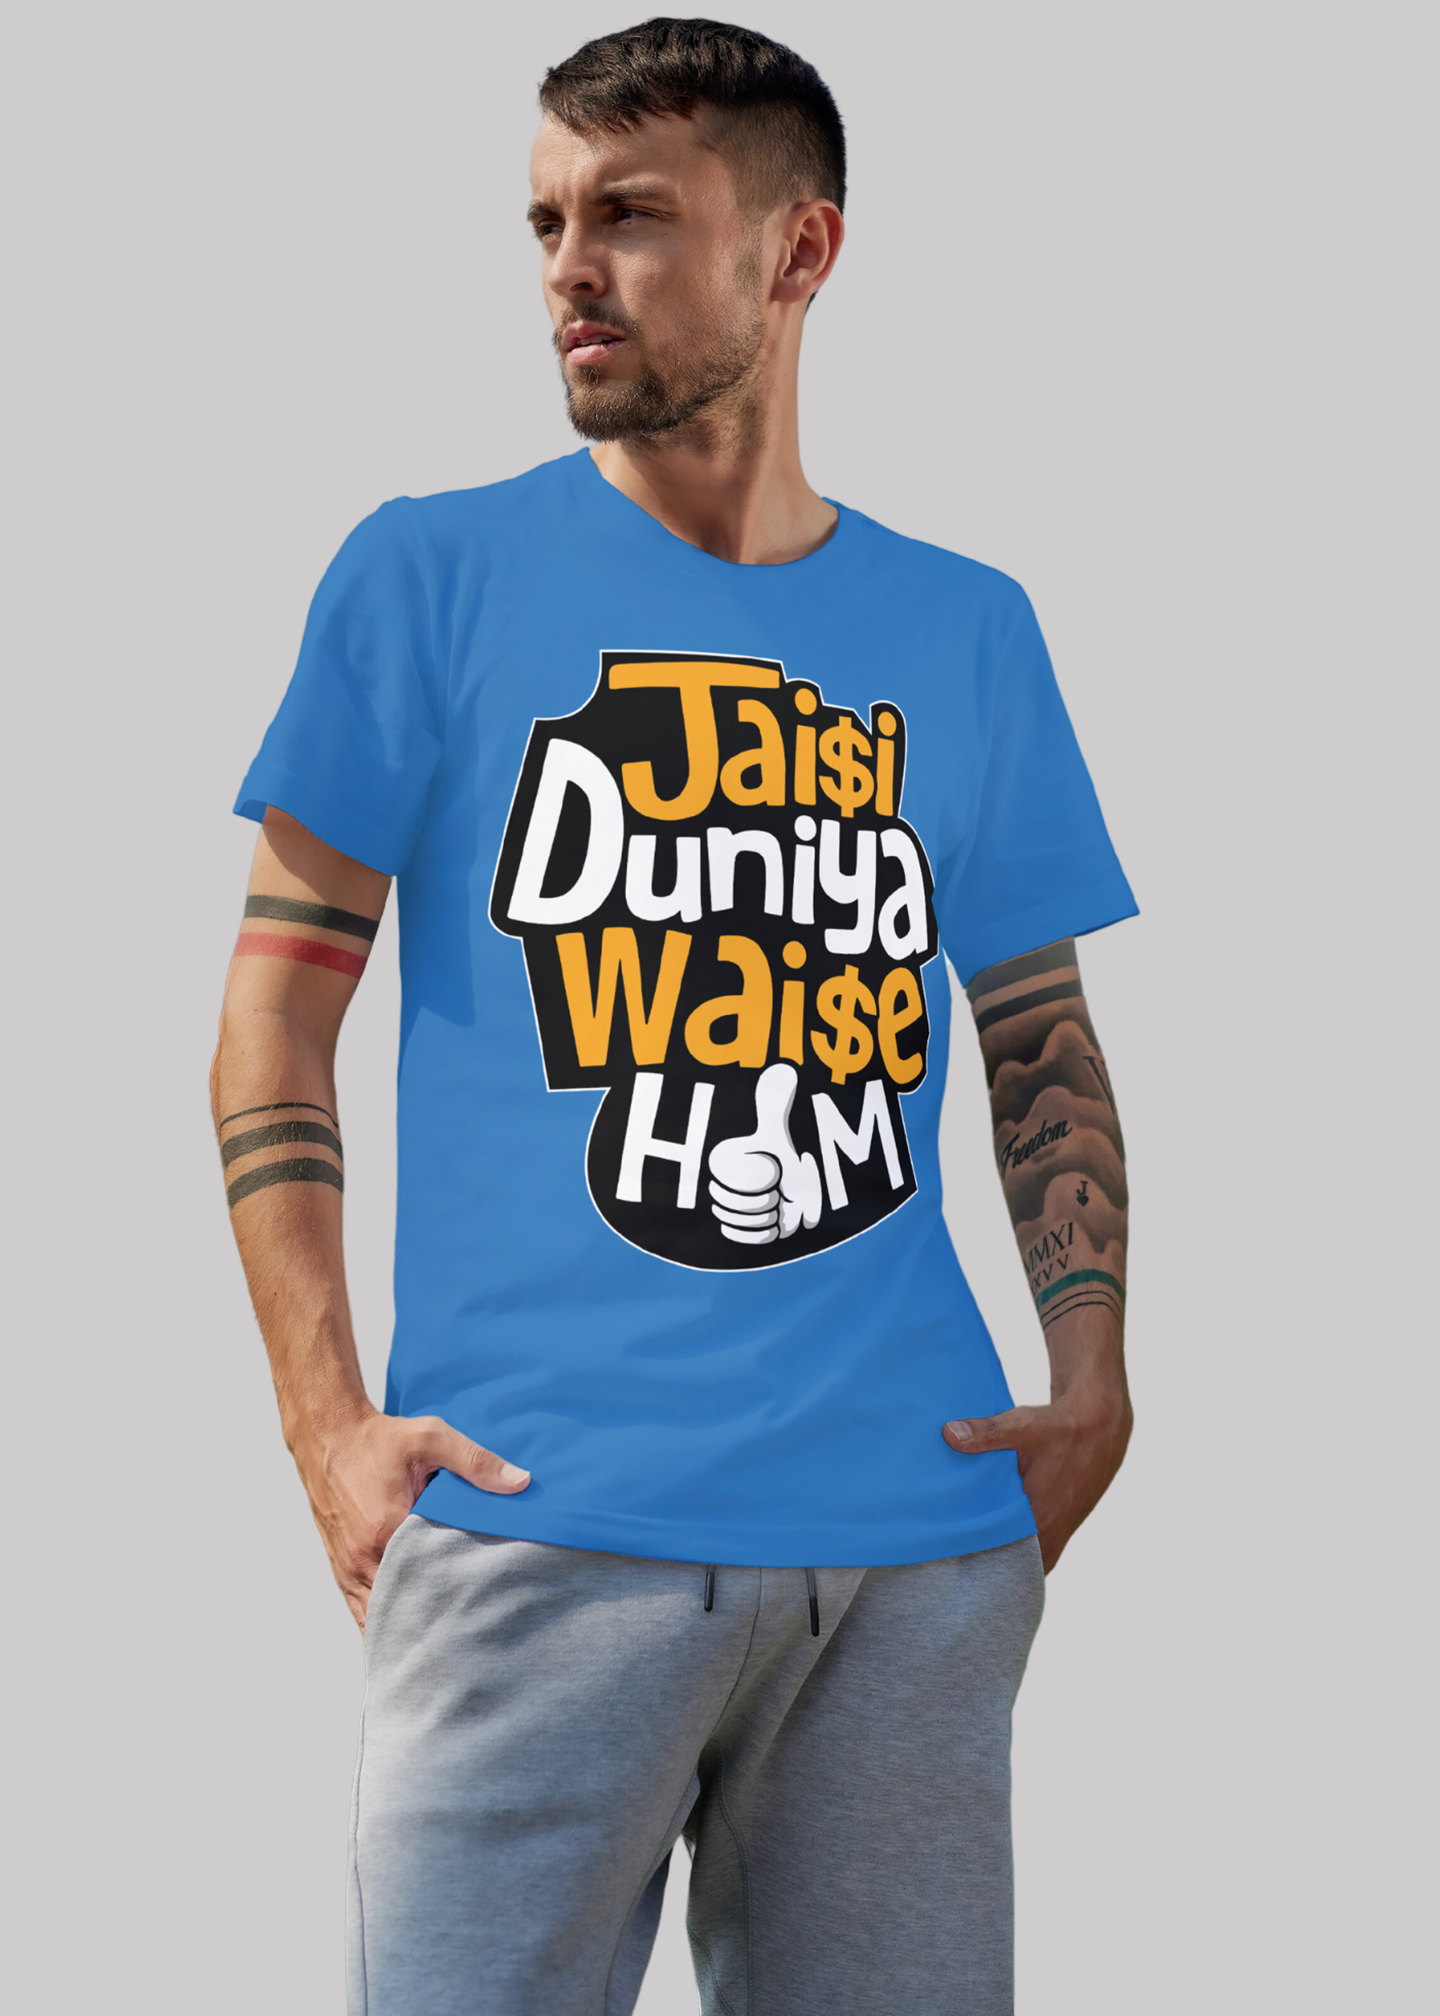 Jaisi duniya waise hum Printed Half Sleeve Premium Cotton T-shirt For Men